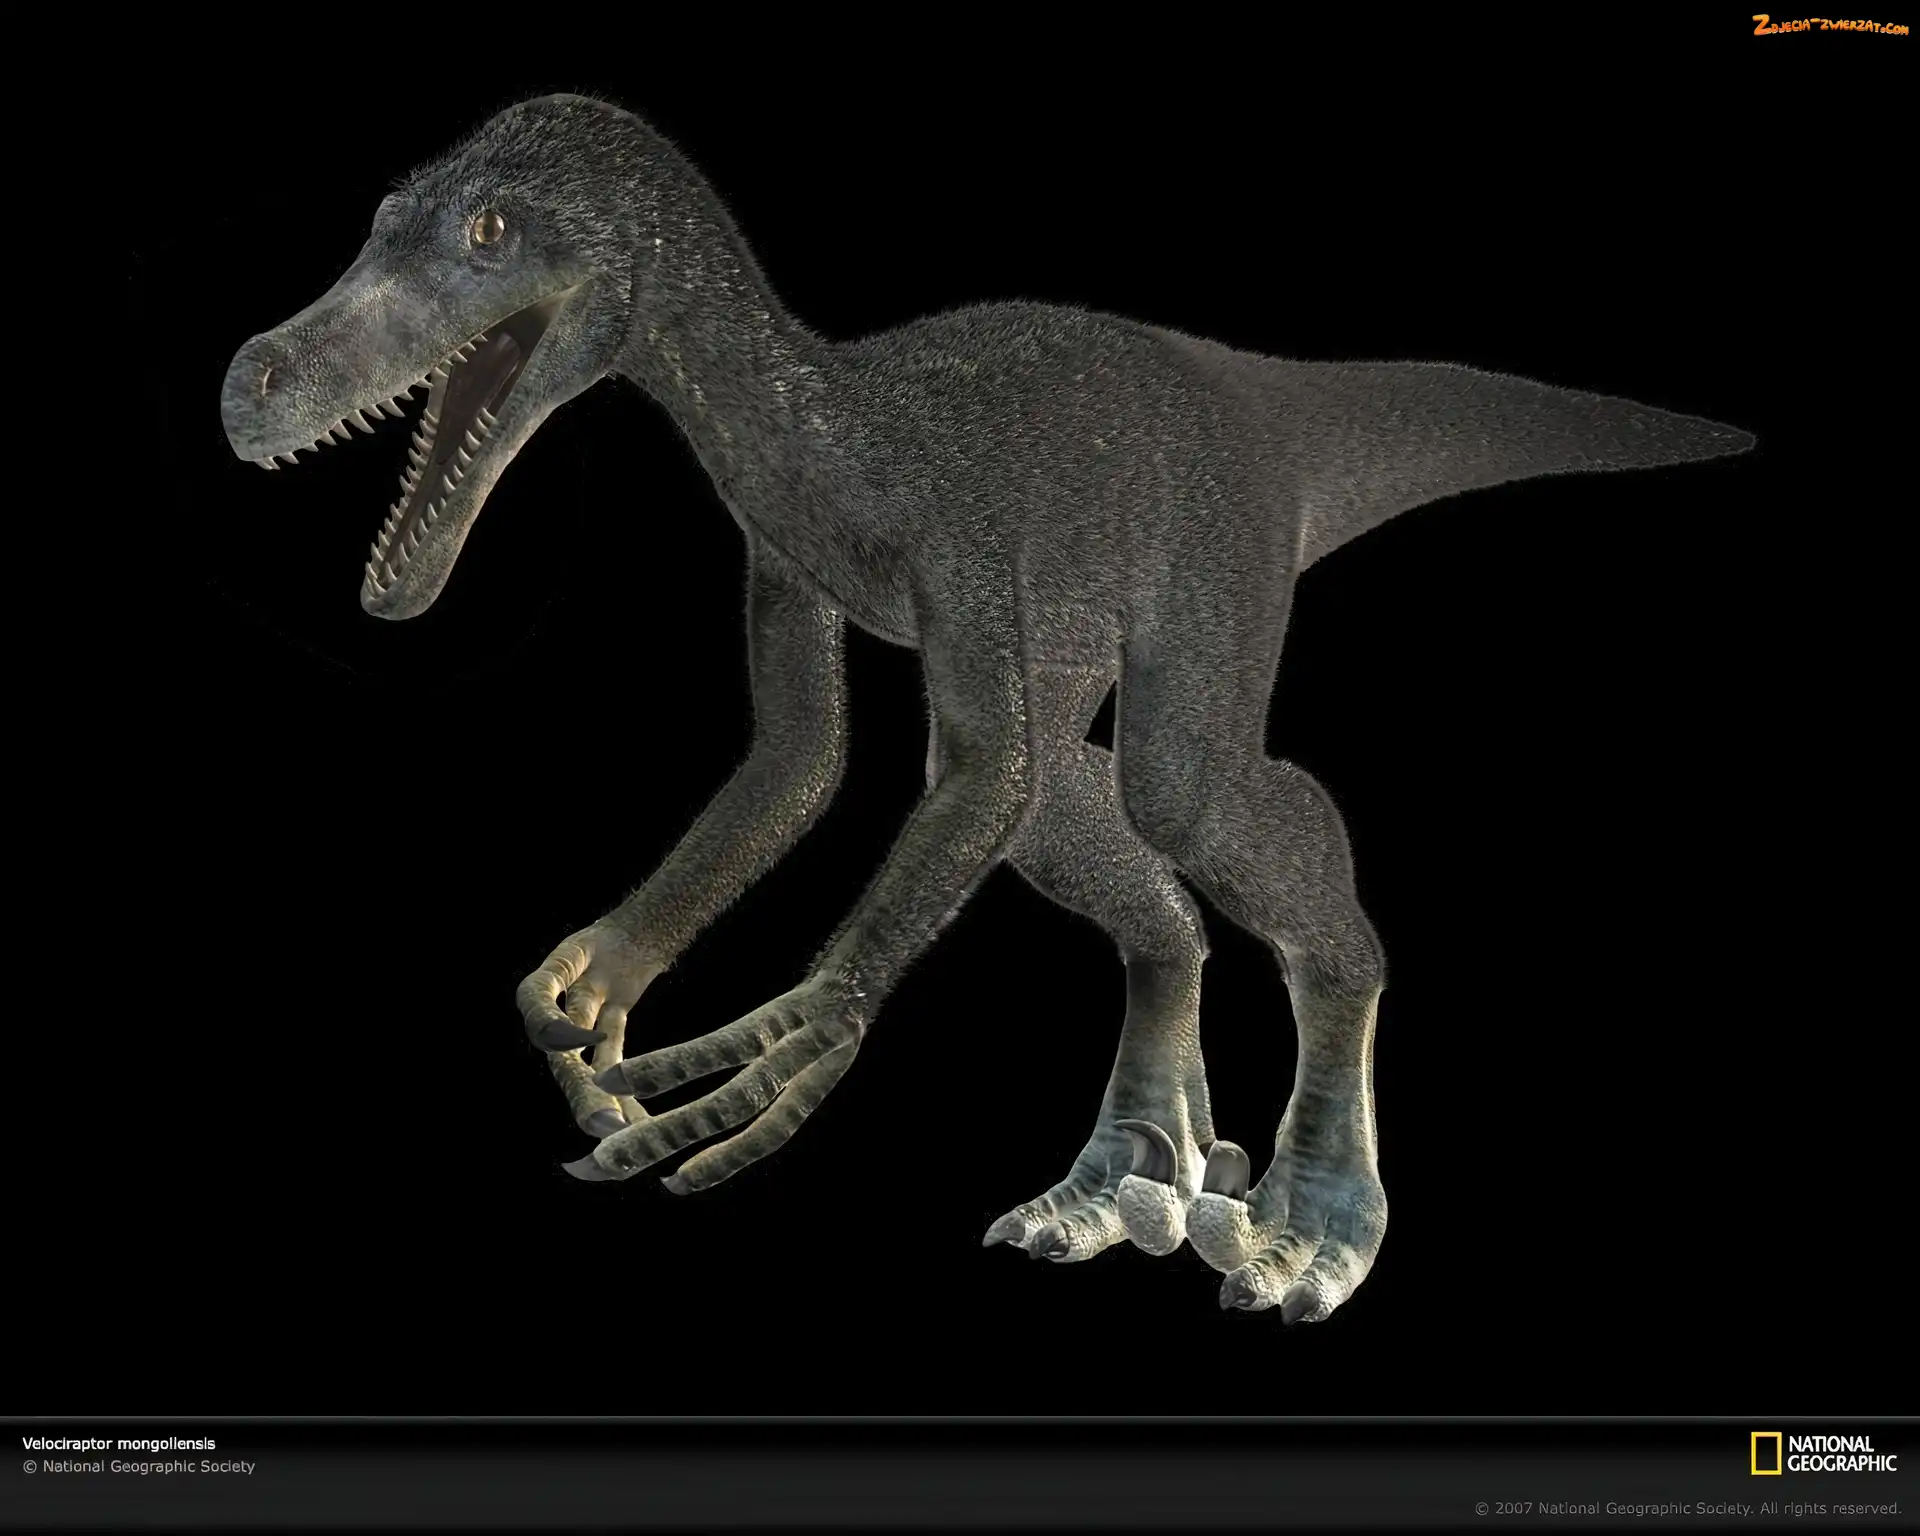 Velociraptor, Dinozaur